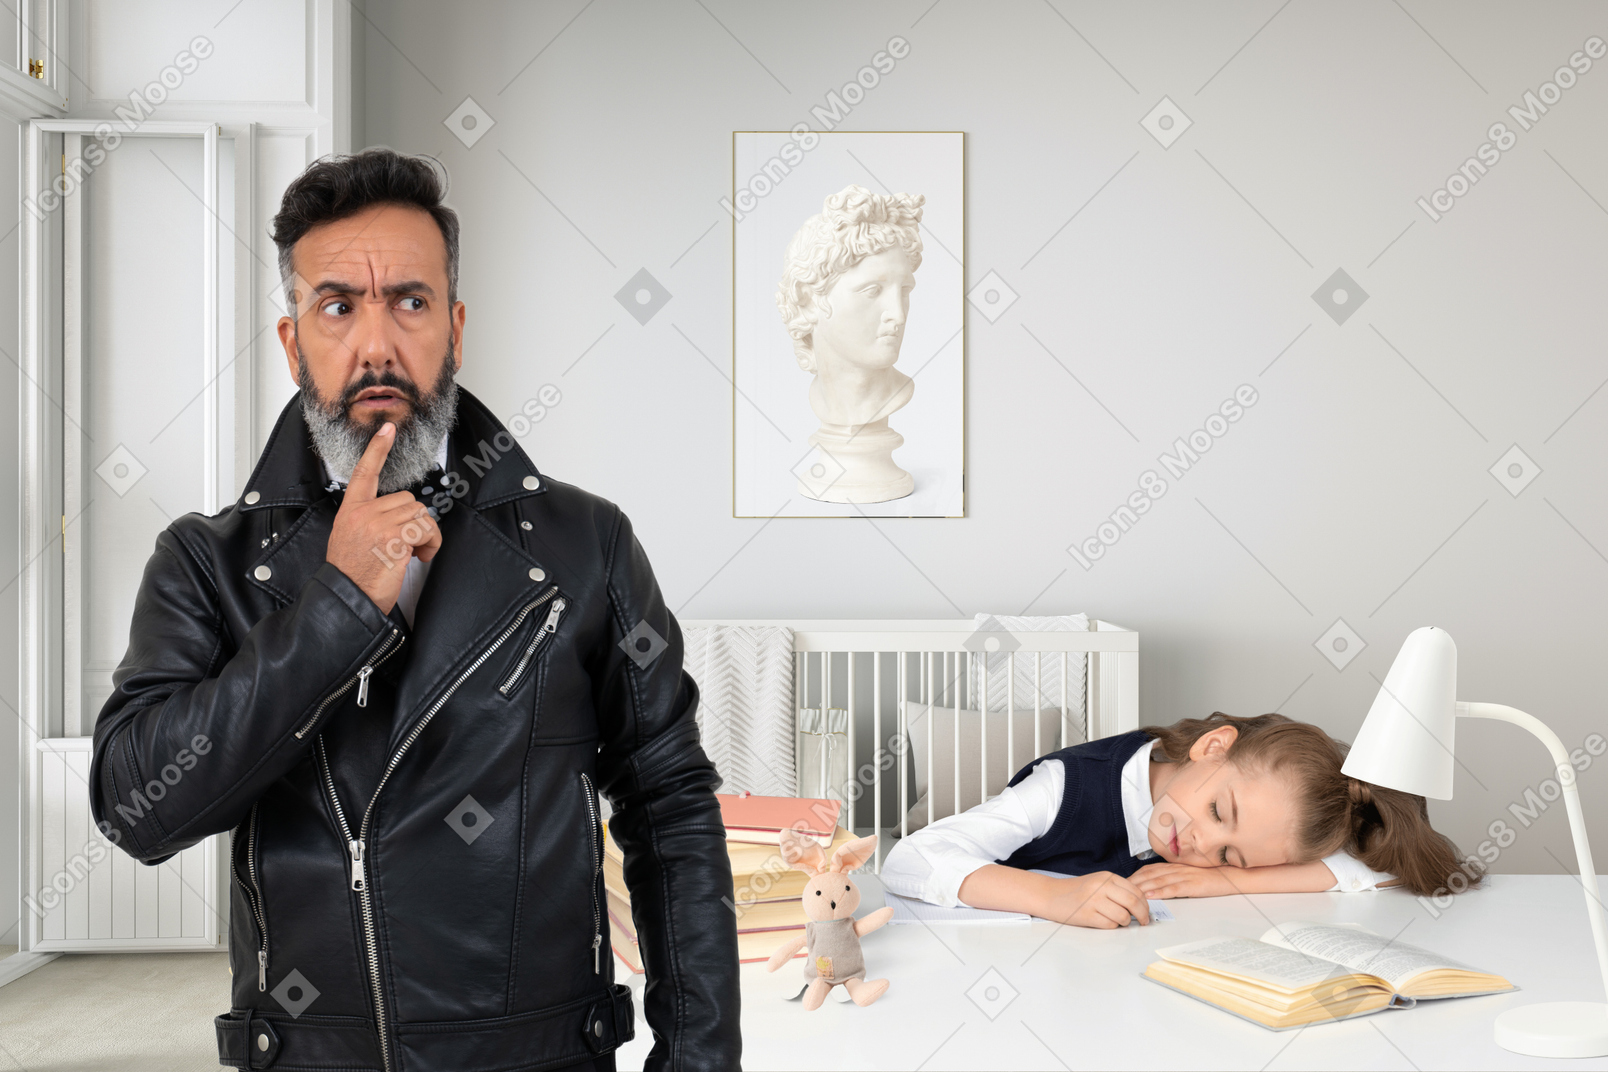 Schoolgirl sleeping on table and her dad looking pensive